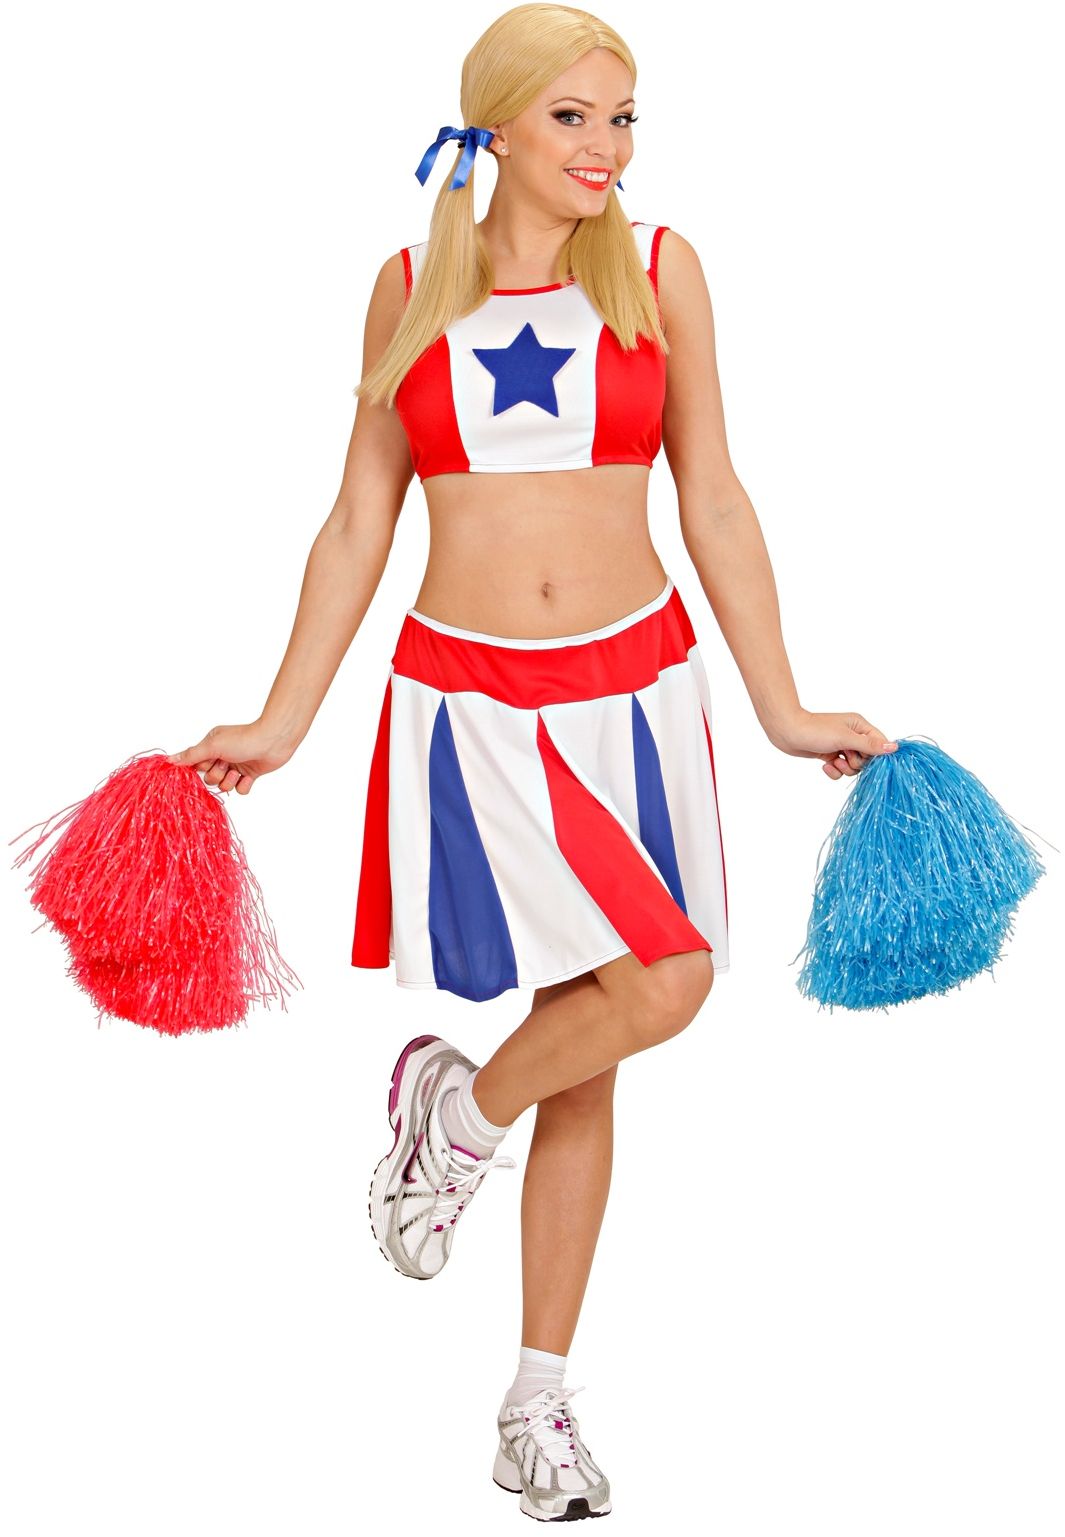 Cheerleader kostuum | Carnavalskleding.nl